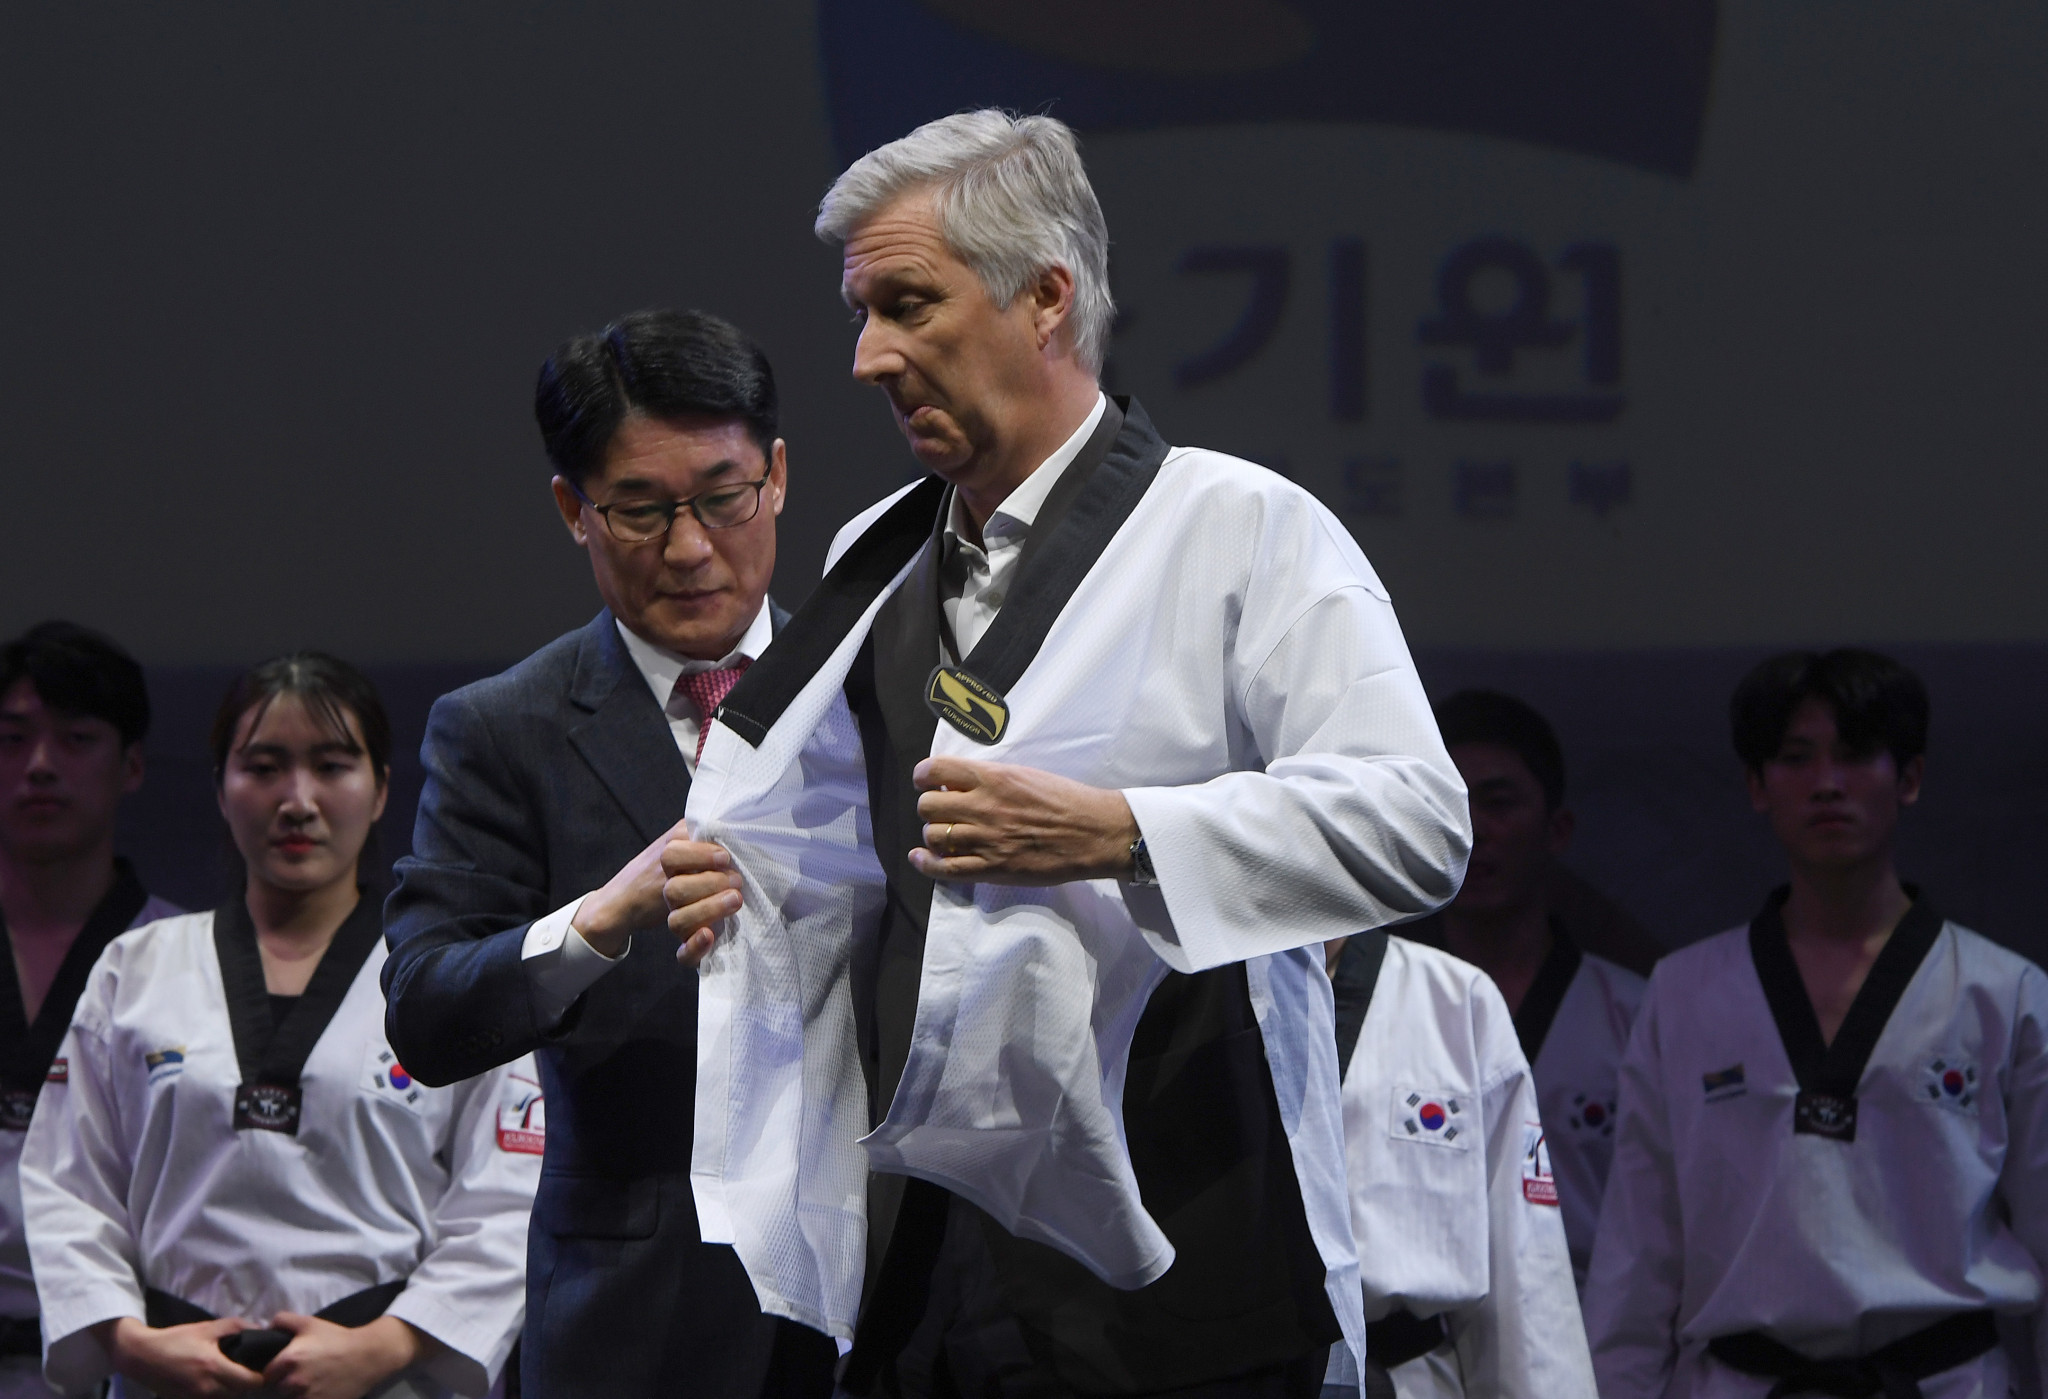 King of Belgium visits World Taekwondo headquarters during state visit to South Korea